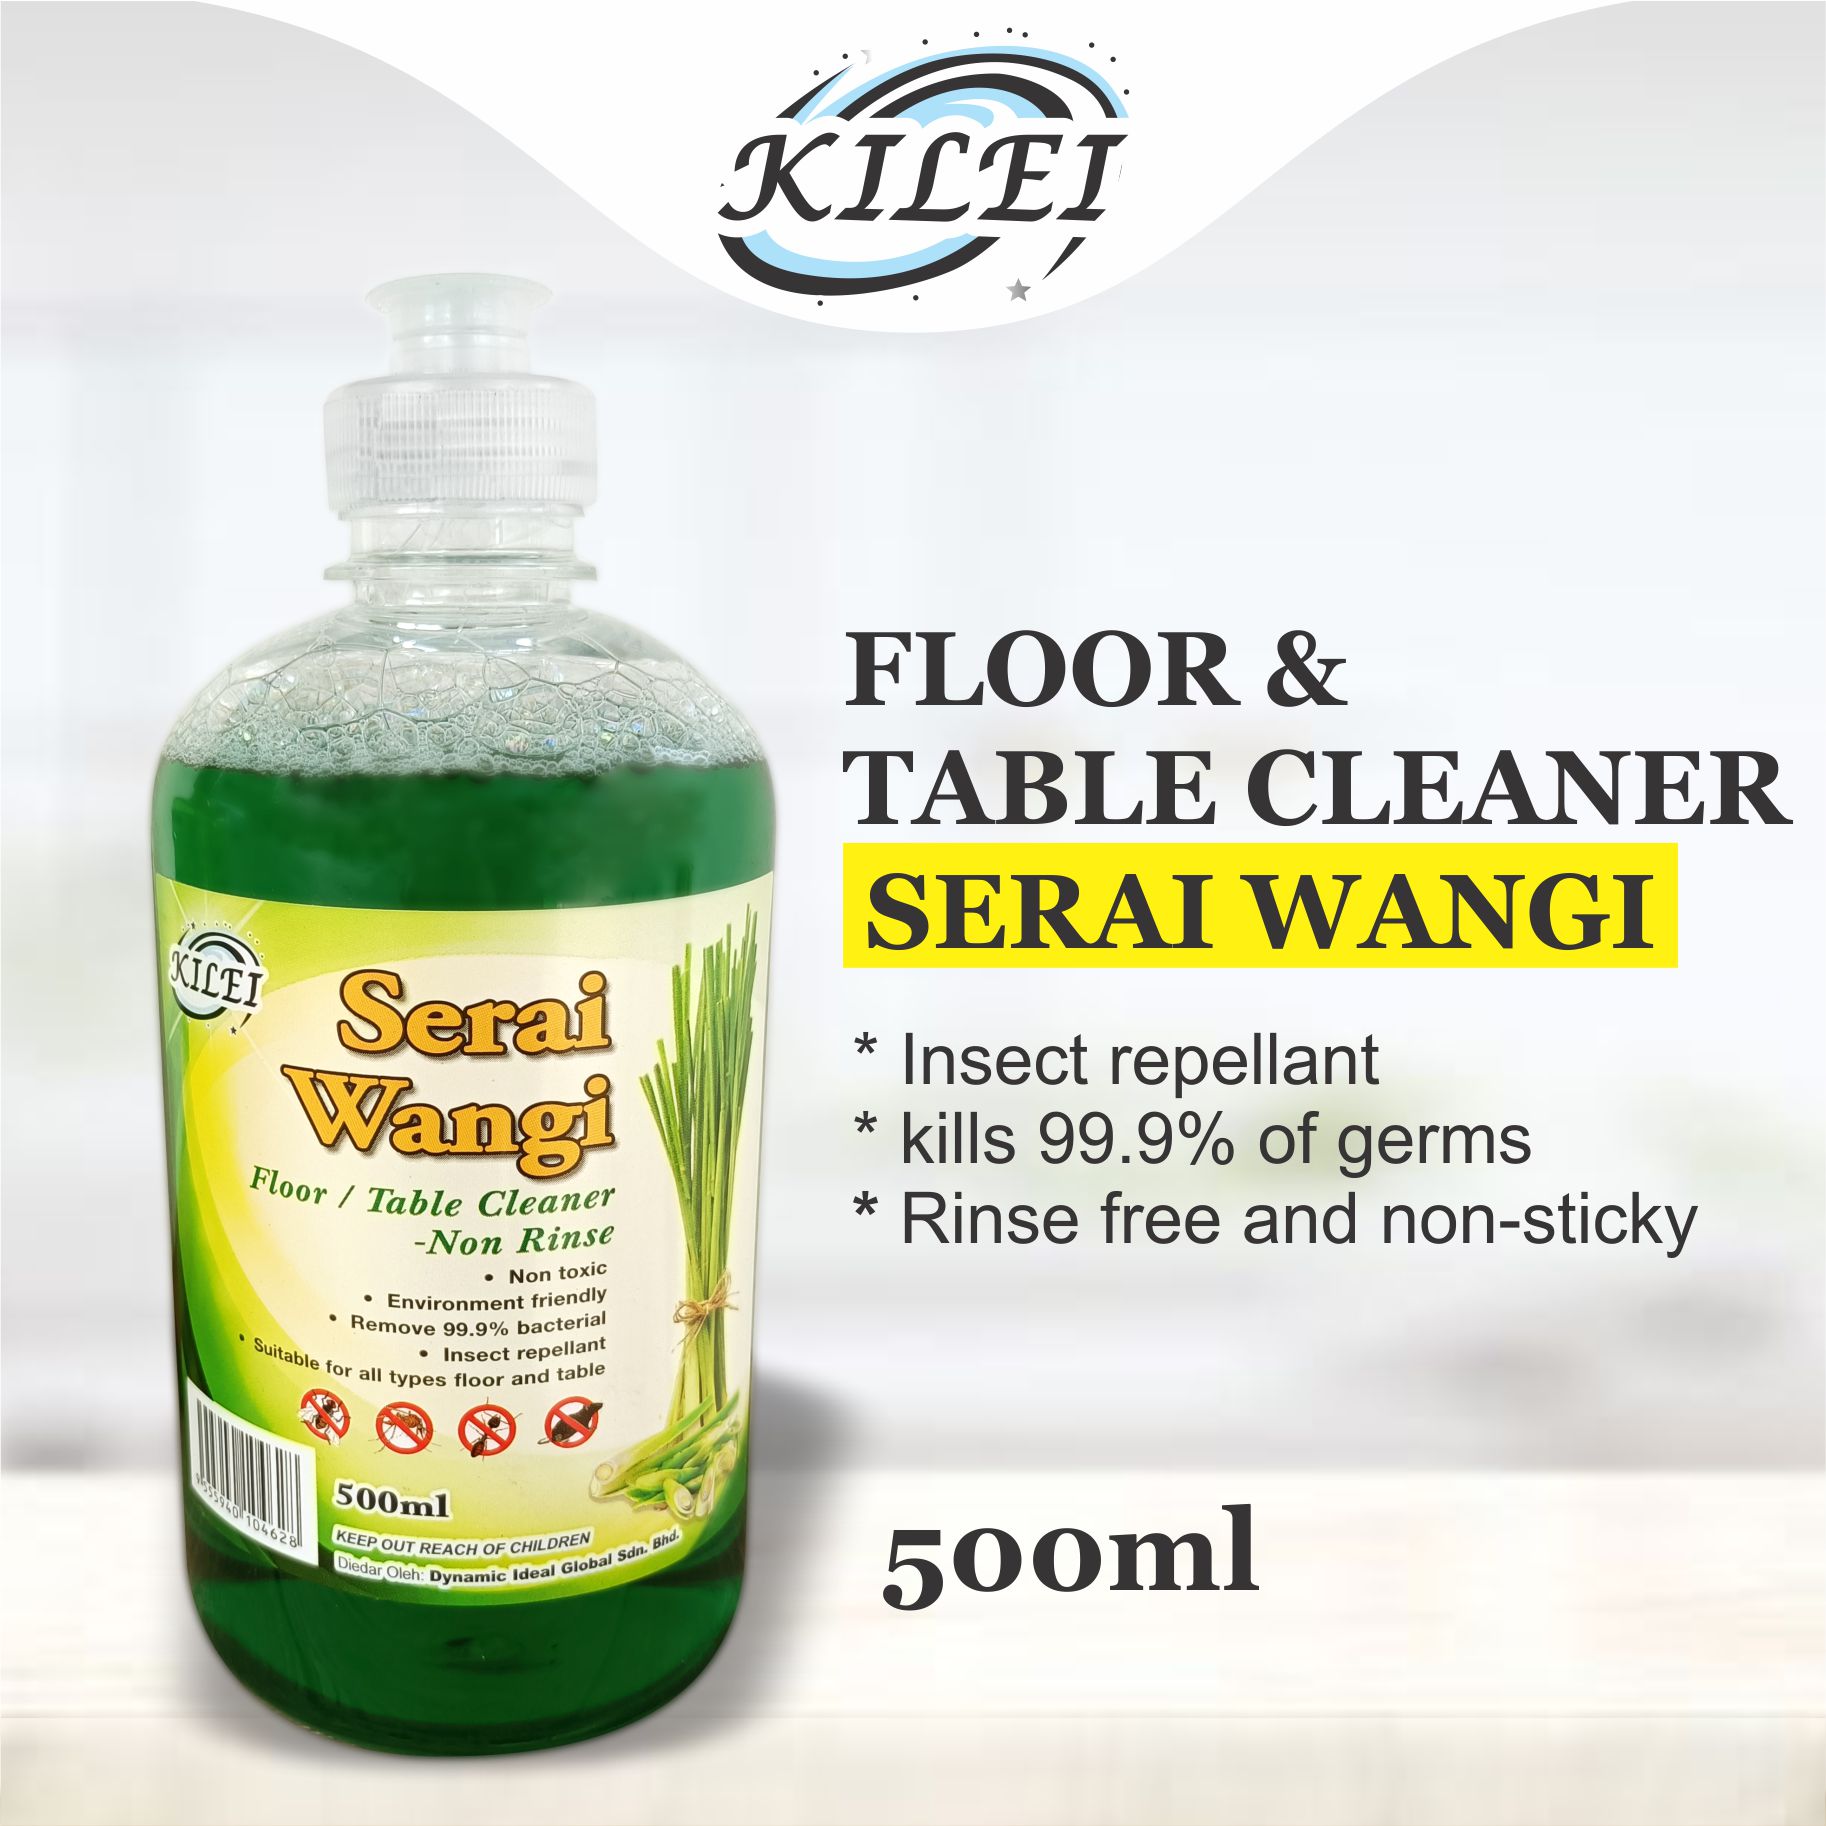 Kilei Floor & Table Cleaner- Serai Wangi [Insect Repellant]- 500ml